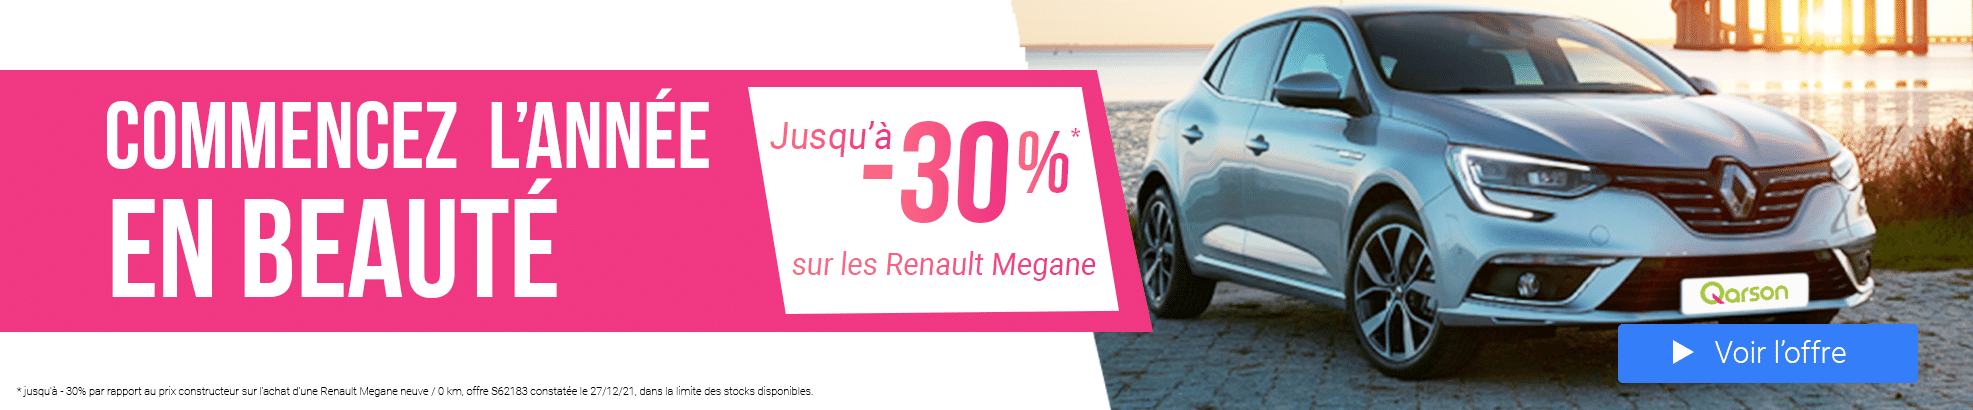 bannière desktop Renault Megane